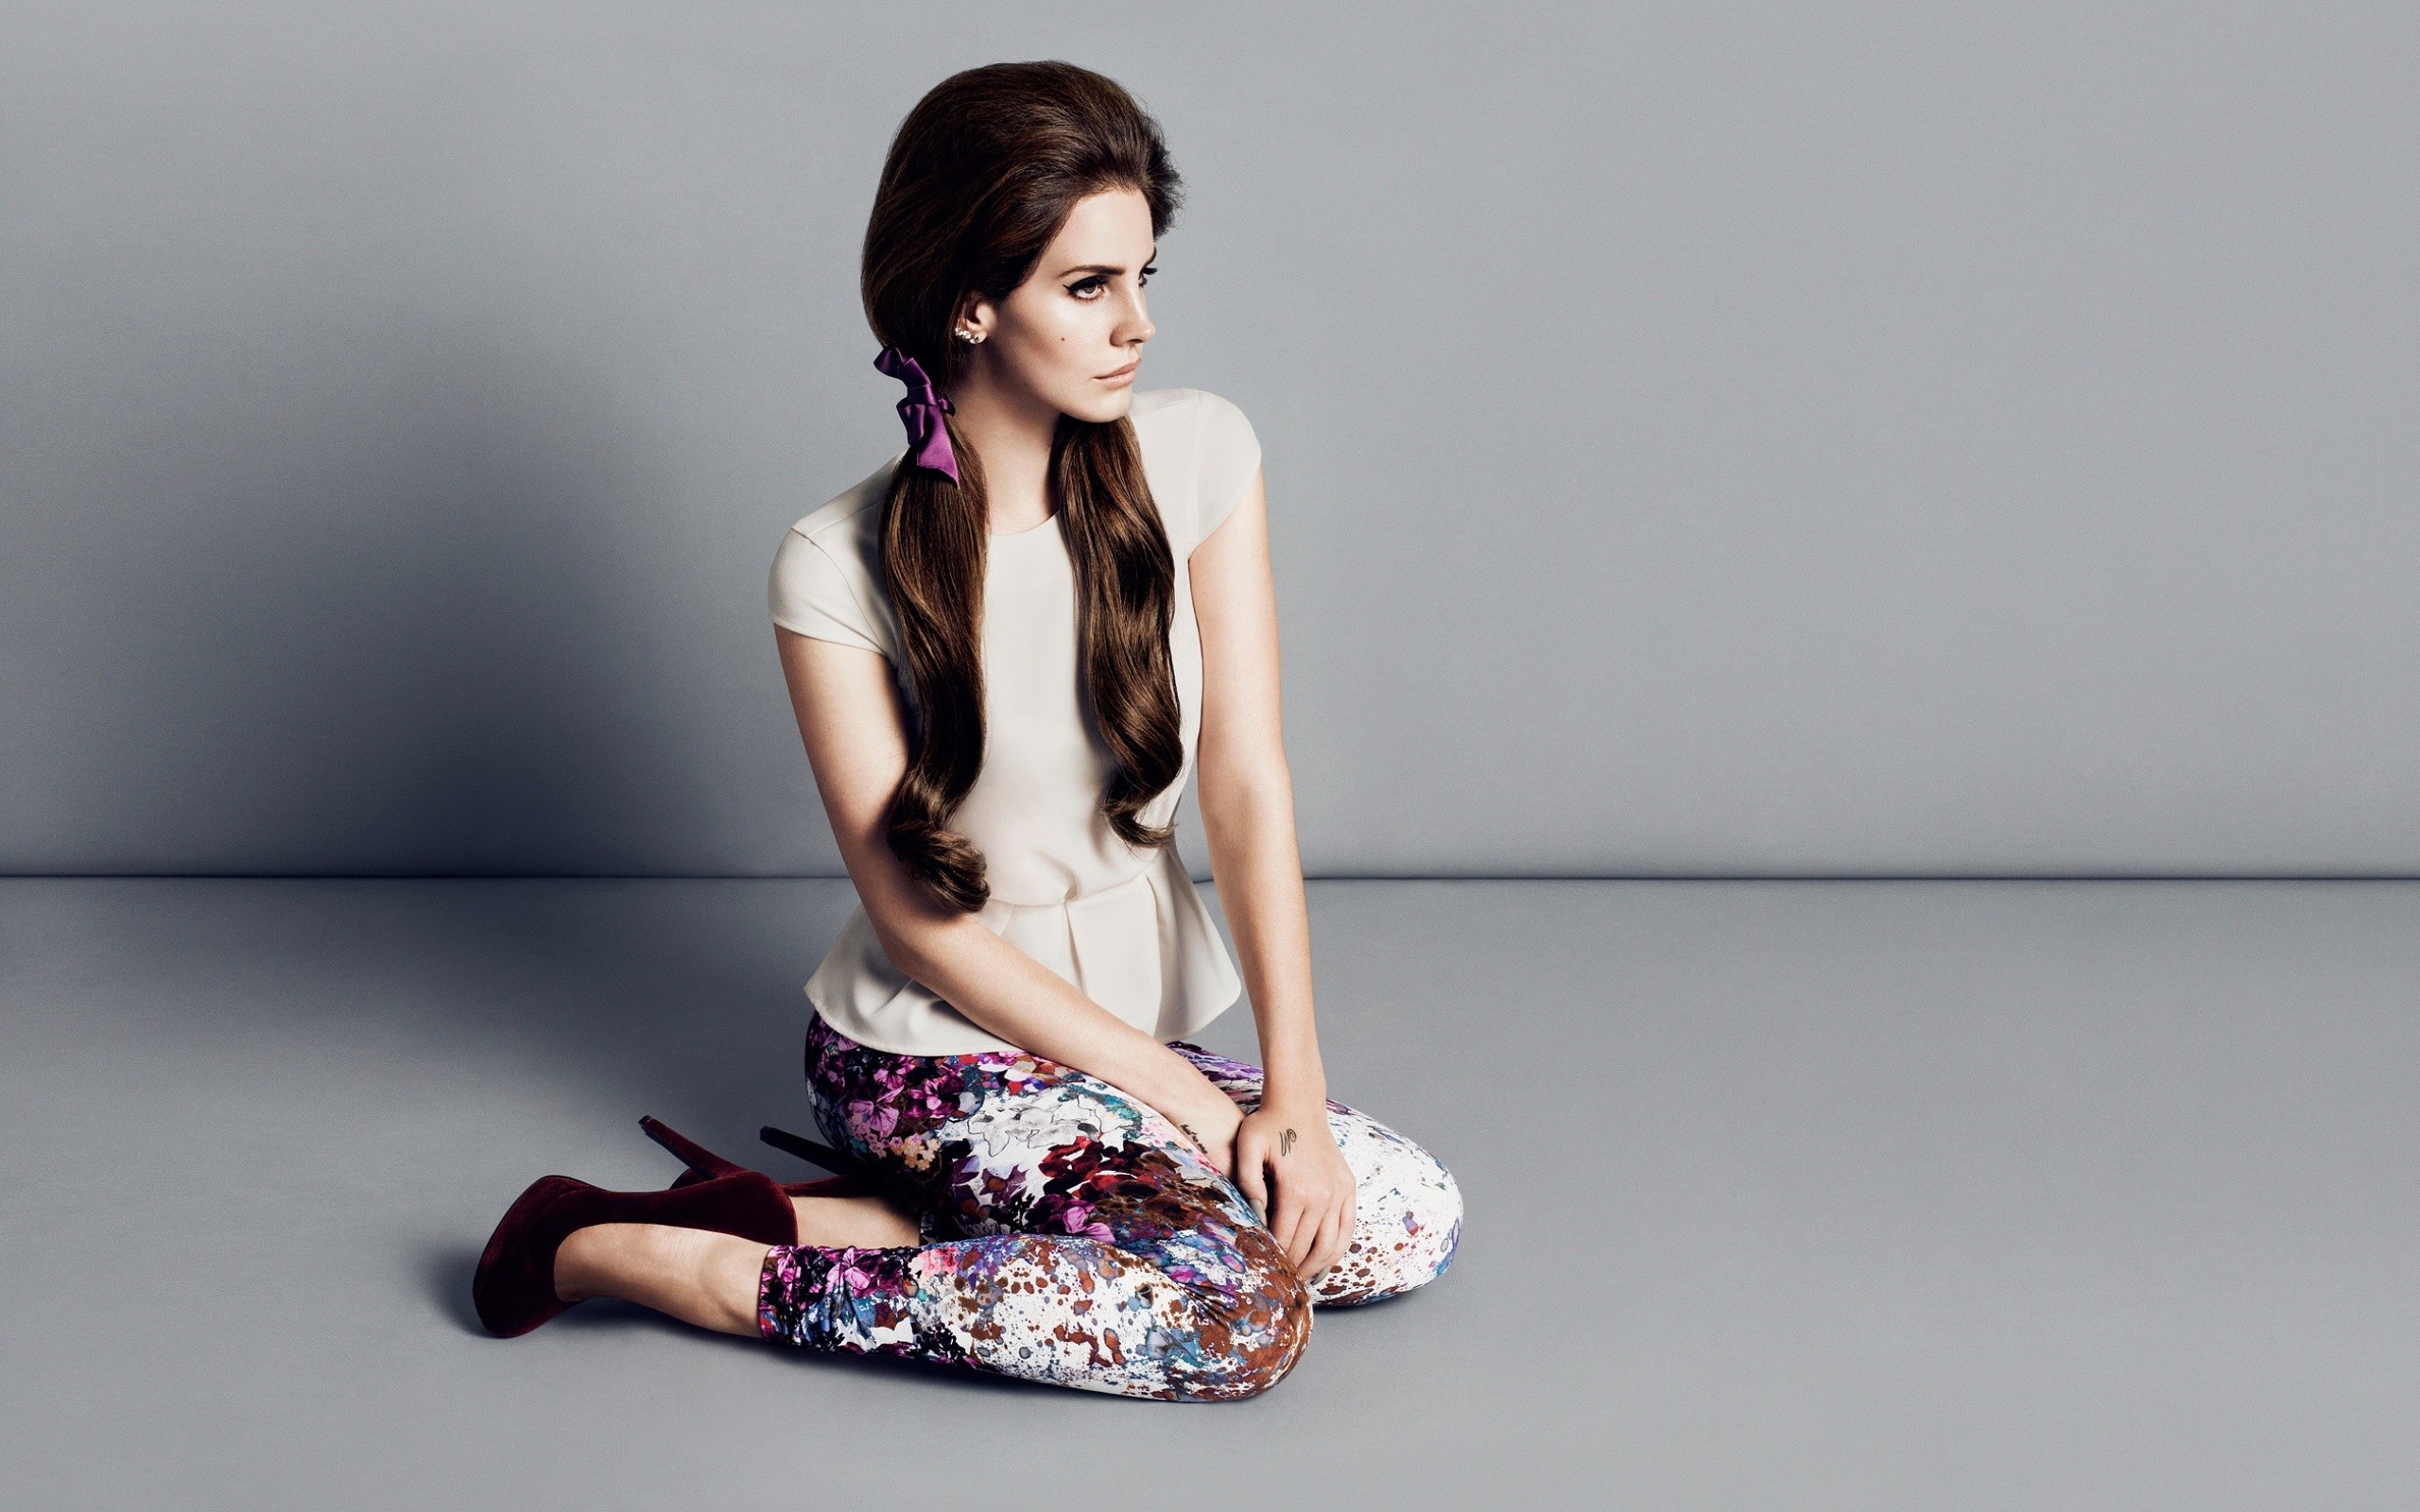 Lana Del Rey For Mobile - Lana Del Rey Sitting , HD Wallpaper & Backgrounds